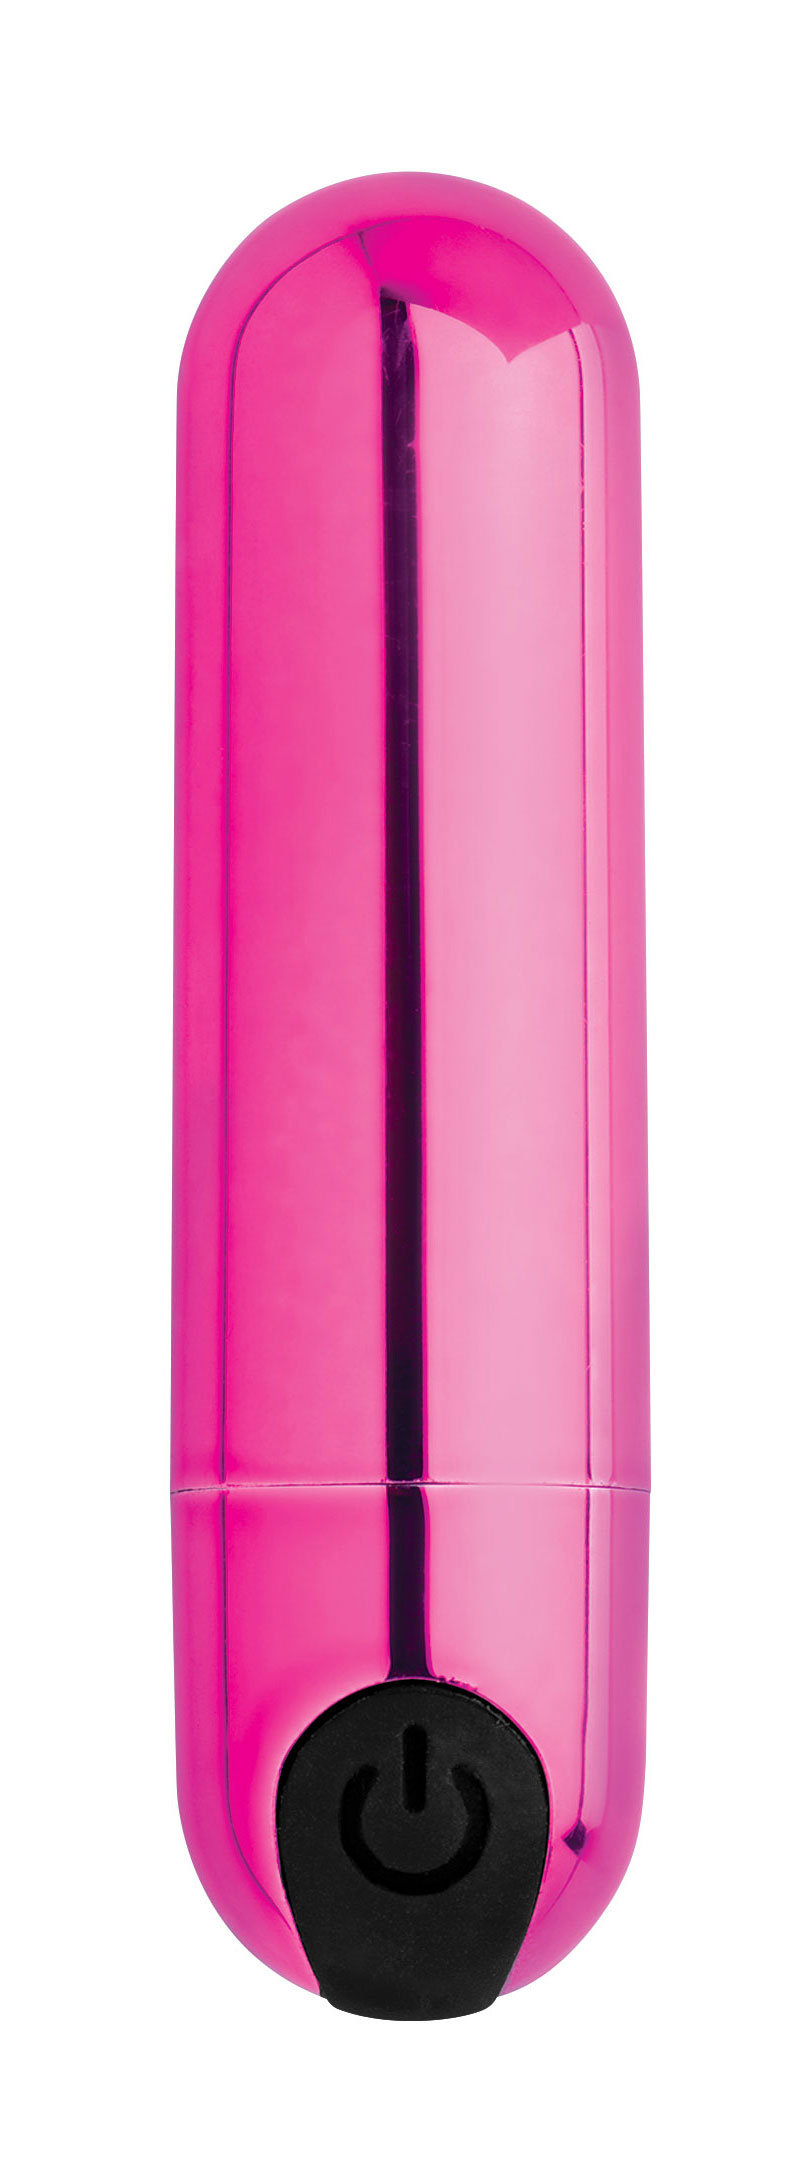 x rechargeable vibrating metallic bullet pink 